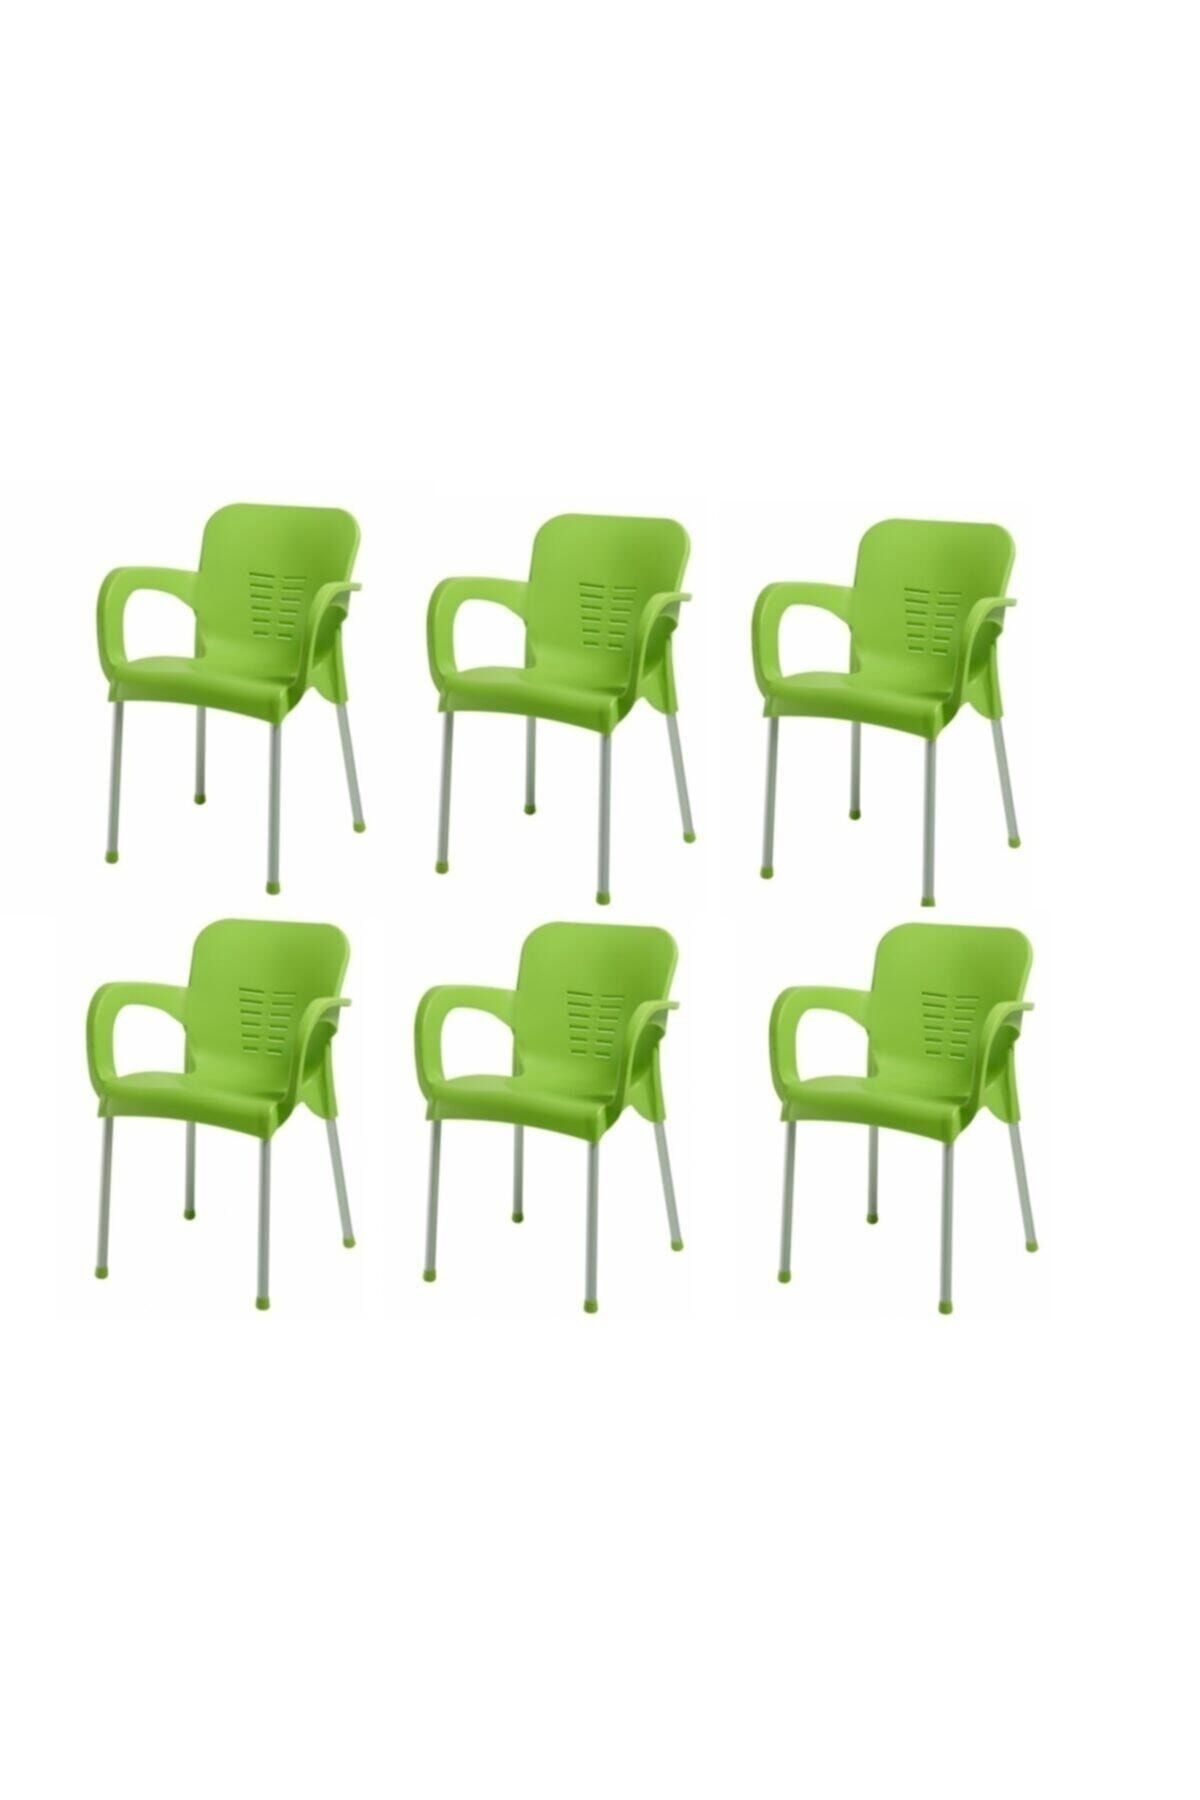 NetBazaars Plastik Sandalye 6 Adet Nobel Balkon Bahçe Kamp Mobilya (yeşil) Xömbx98